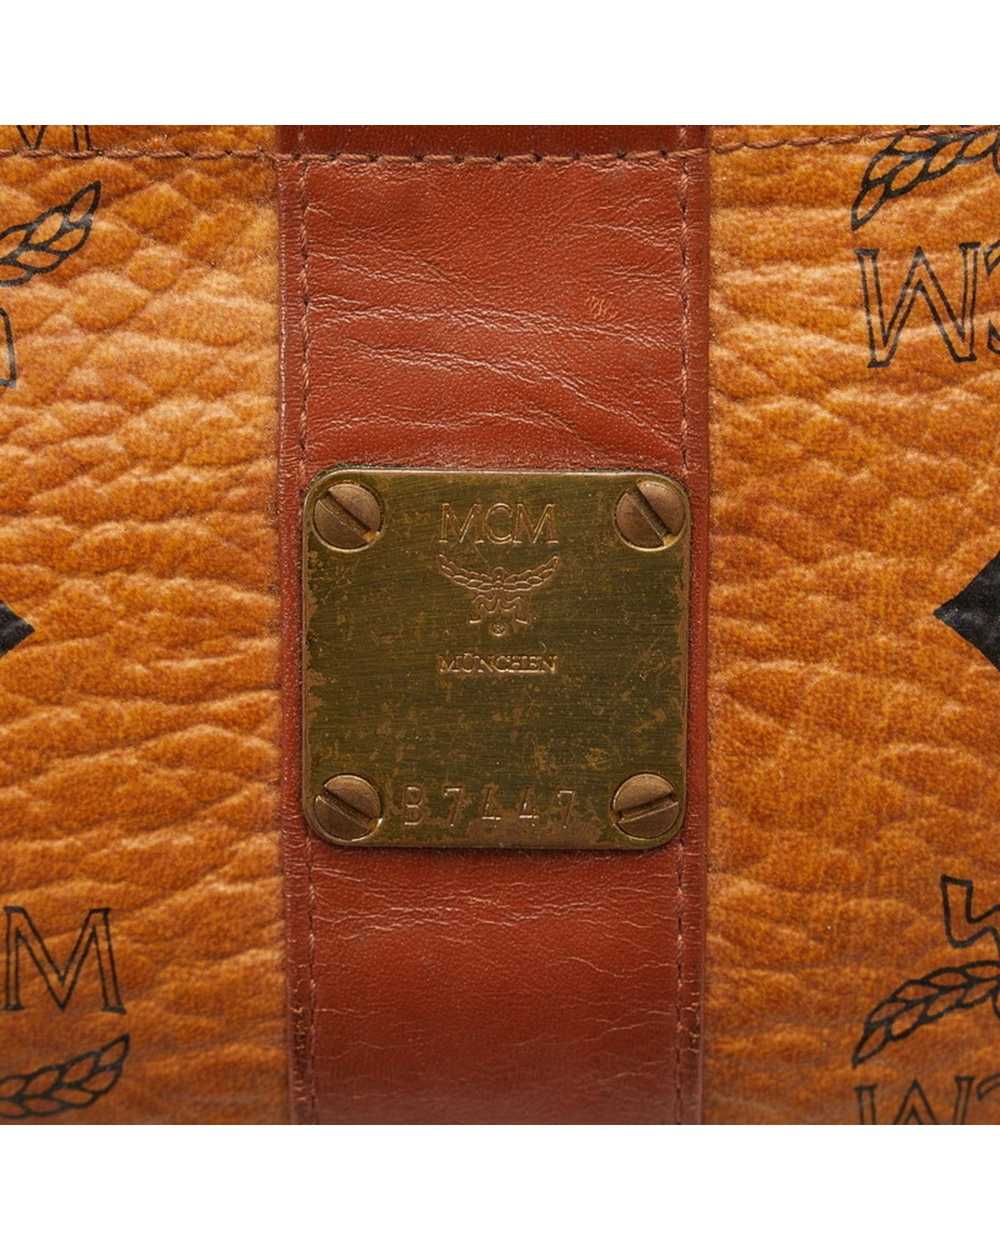 MCM Brown Leather Fanny Pack/Sling Bag - image 8